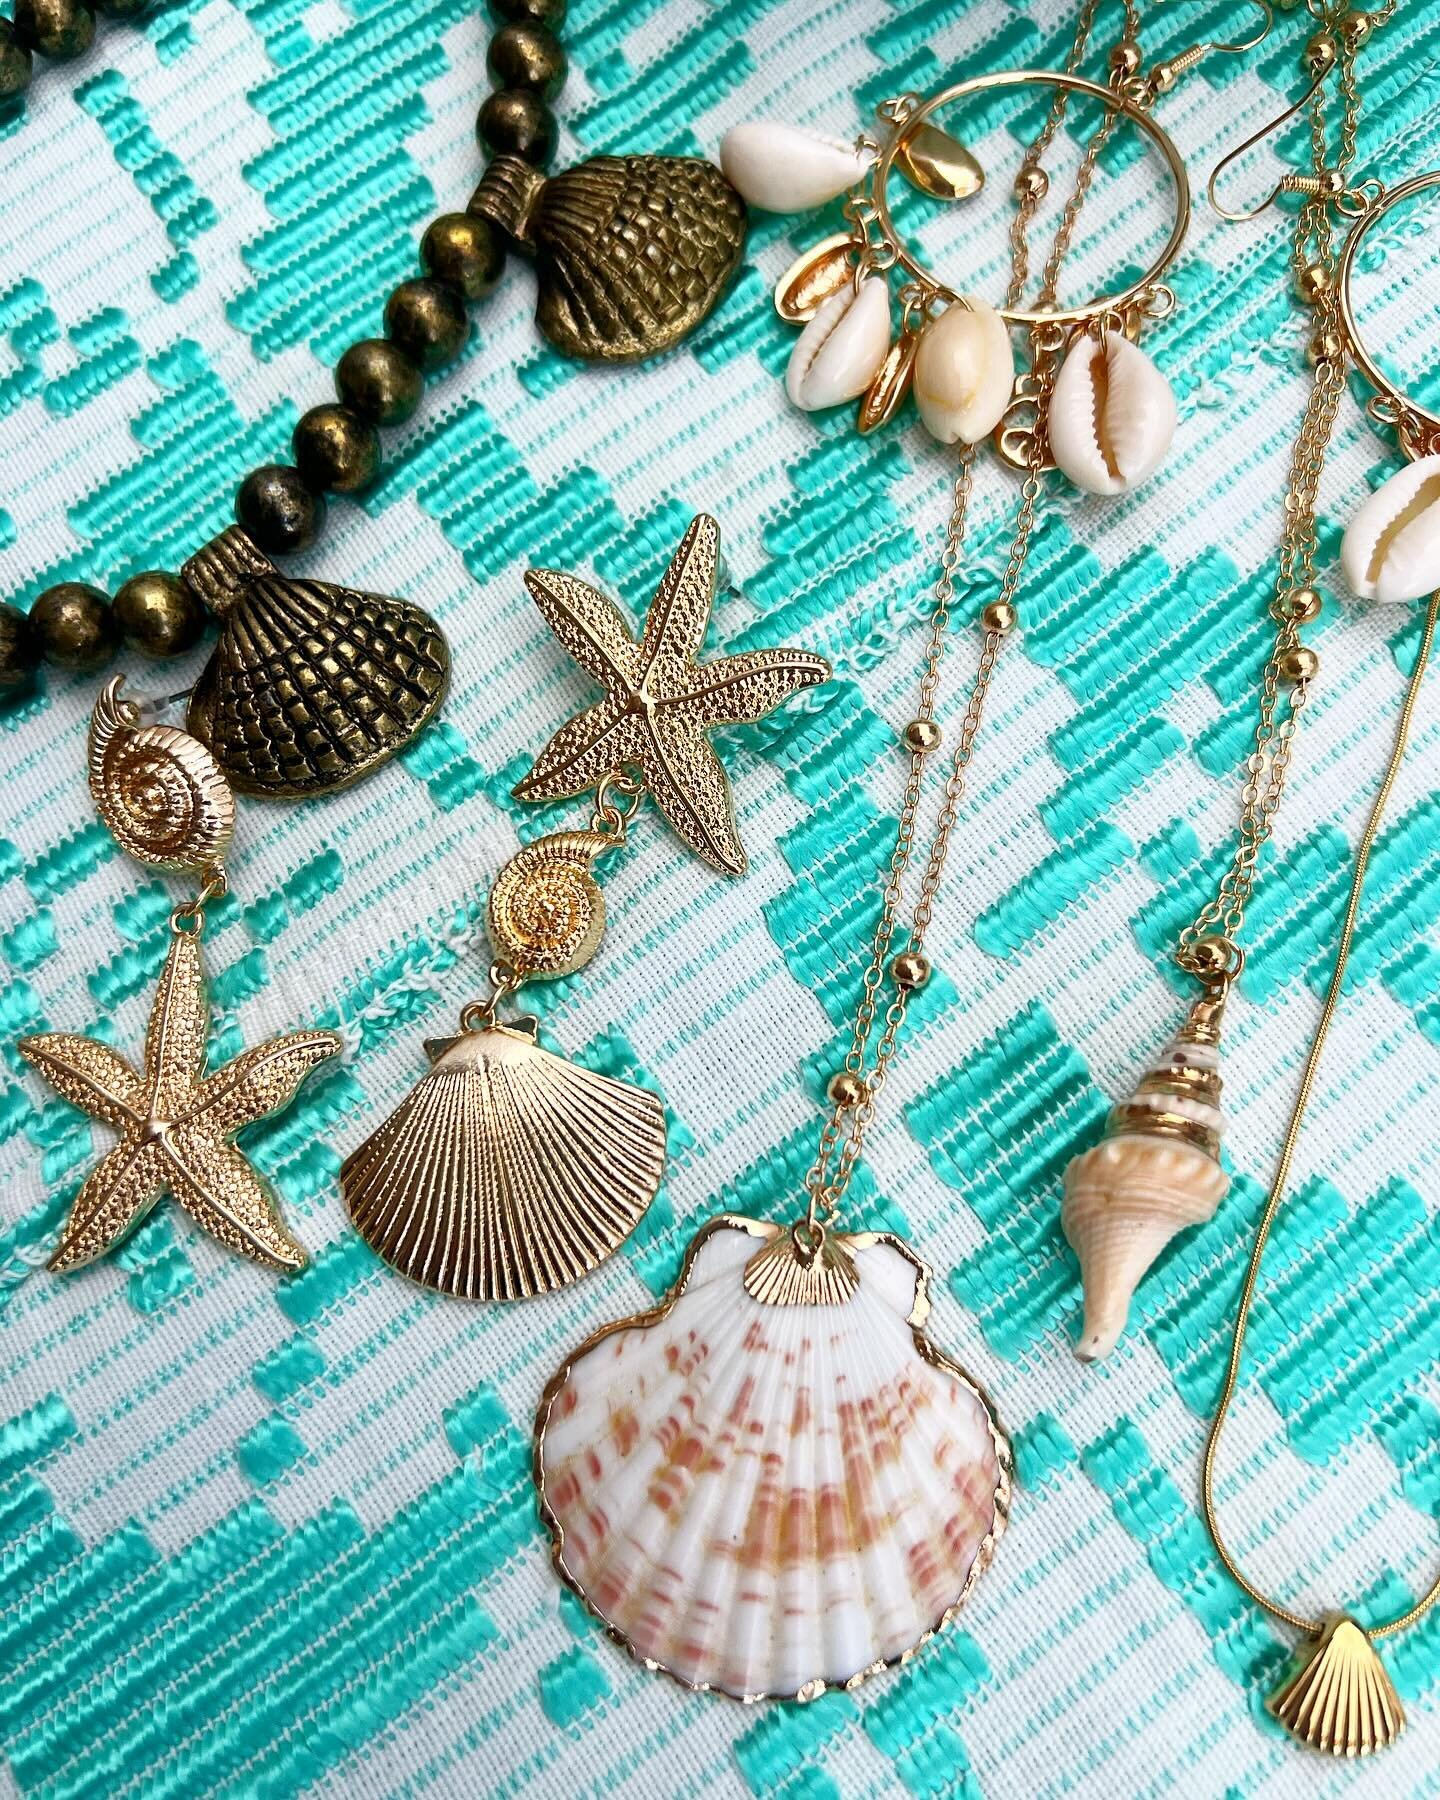 She sells seashells on the sea shore&hellip;..BTS from our shoot yesterday 💙💙💙

#bts #accessories #shells #beach #island #boho bohemian #photoshoot #joy #create #inspire #spring #summer